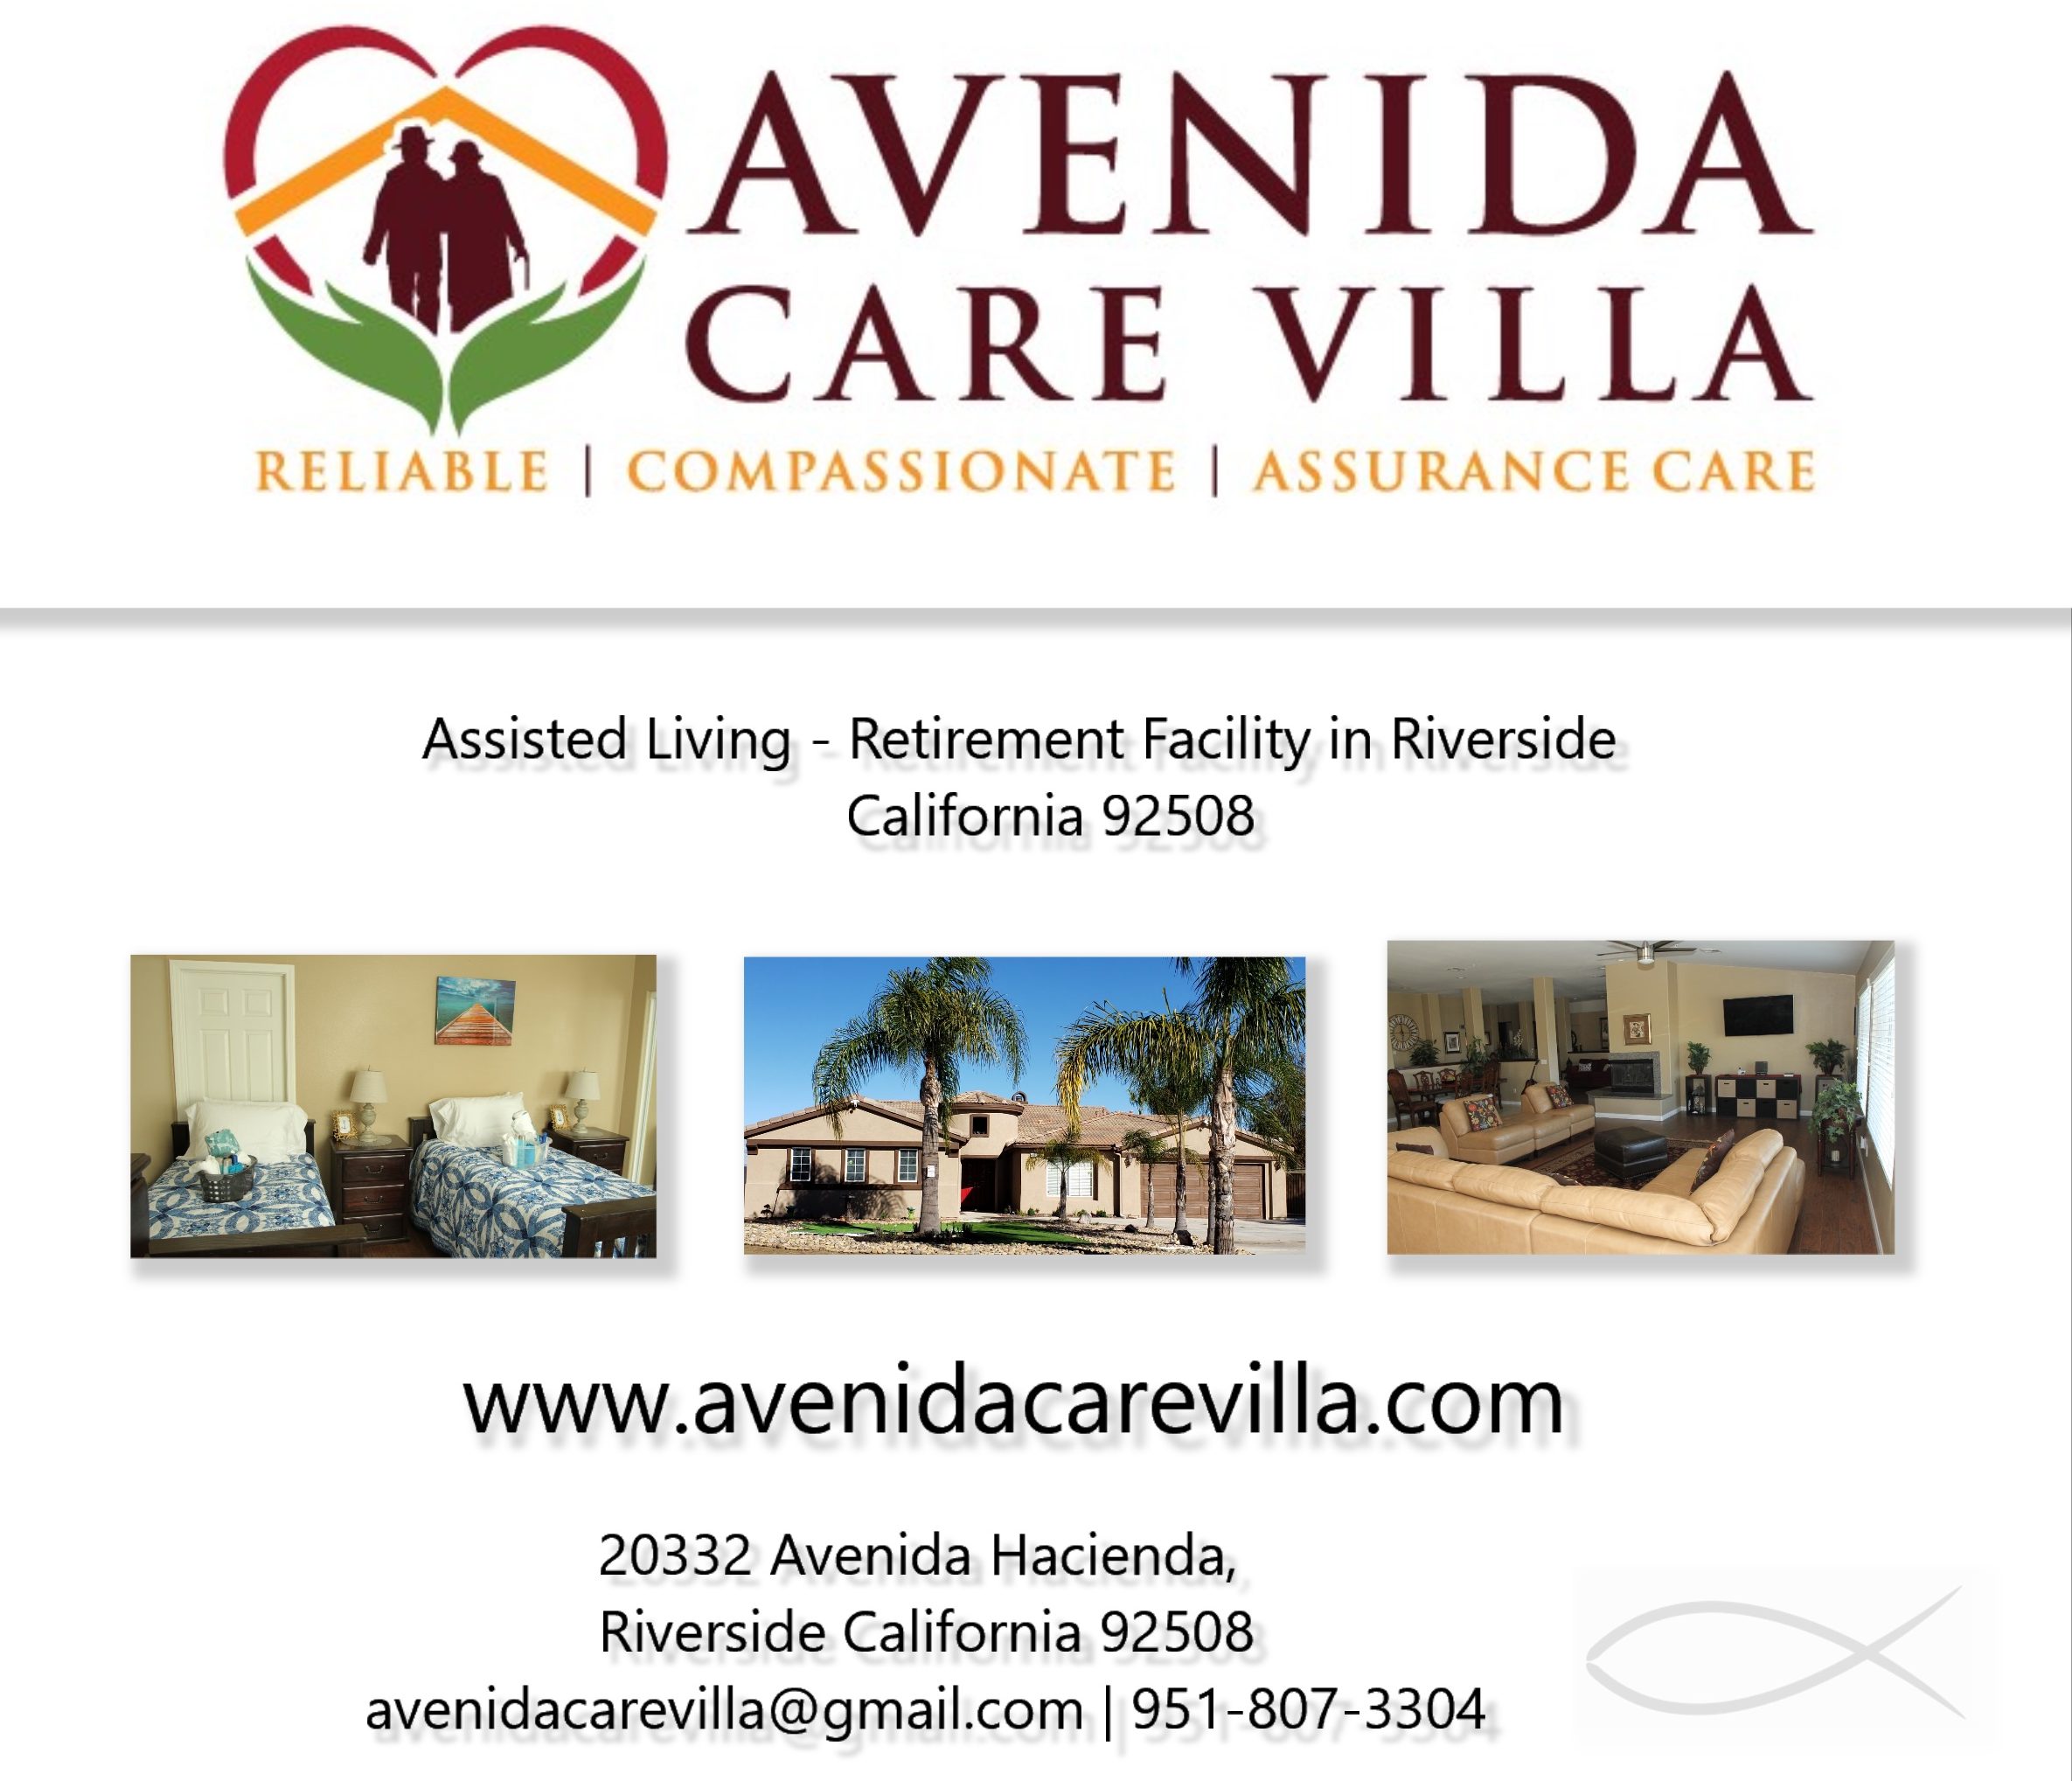 Avenida Care Villa - Assisted Living Skilled Nursing Facility